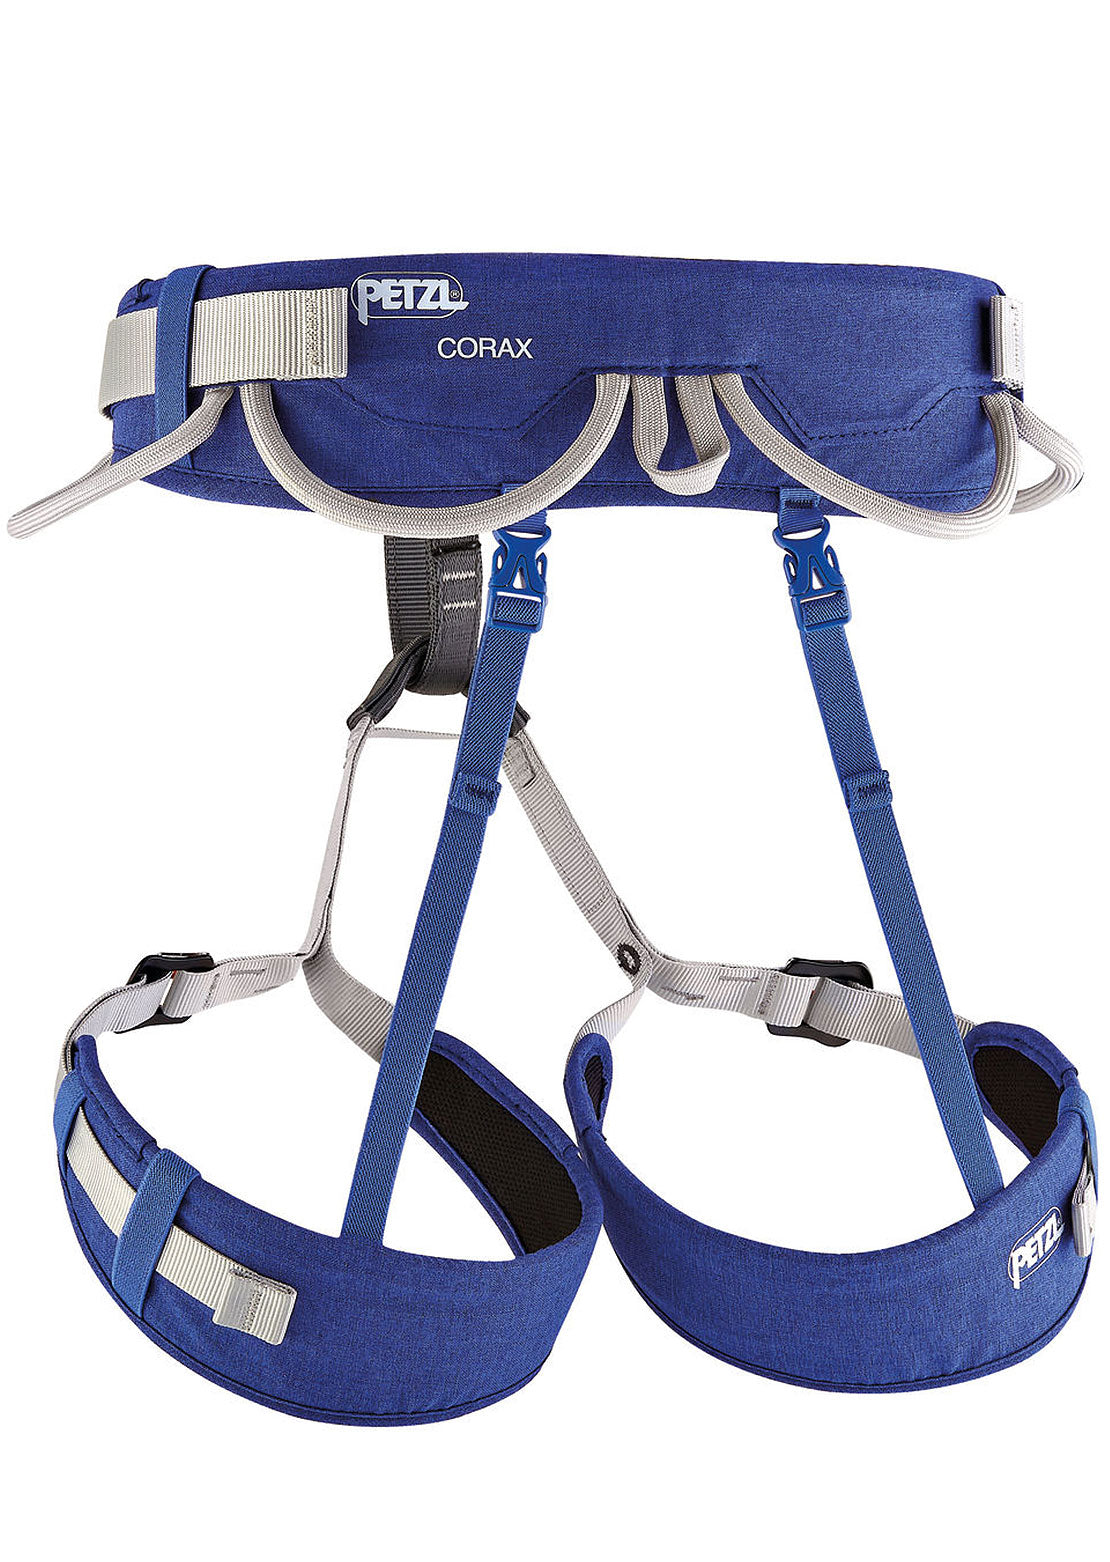 Petzl Corax Climbing Harness Blue